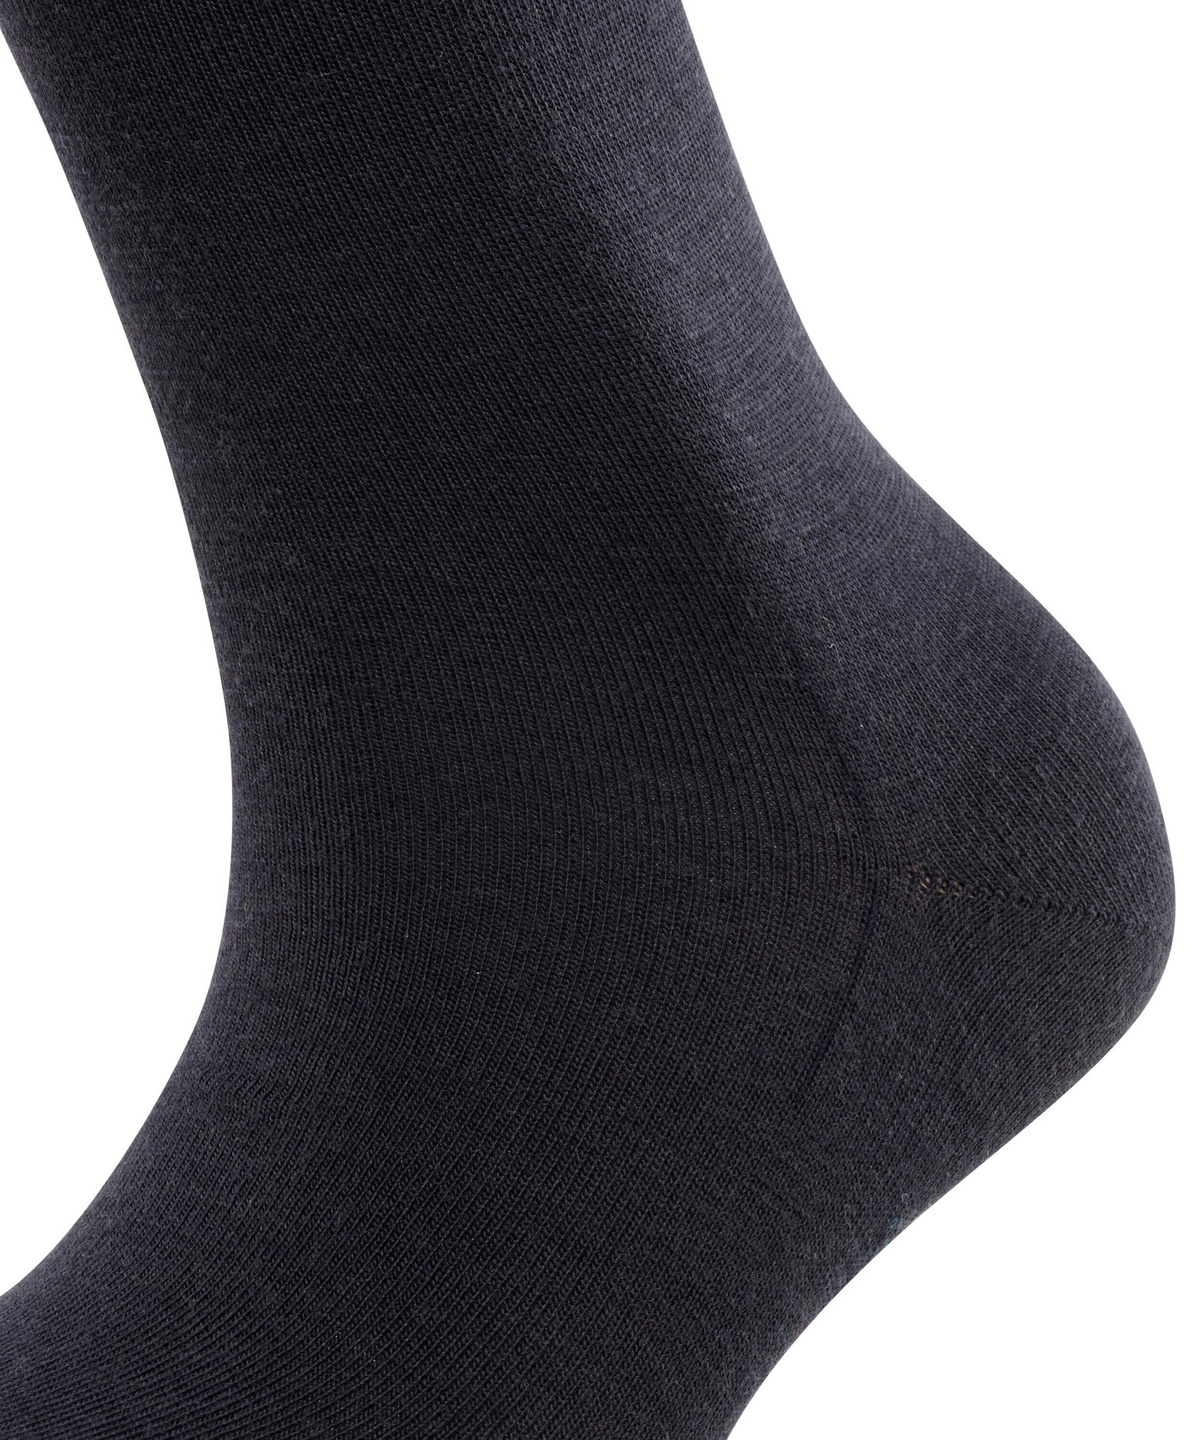 Merino Wool/Cotton Blend 1 Pair FALKE Womens Softmerino Dress Sock US sizes 5 to 10.5 Multiple Colors 